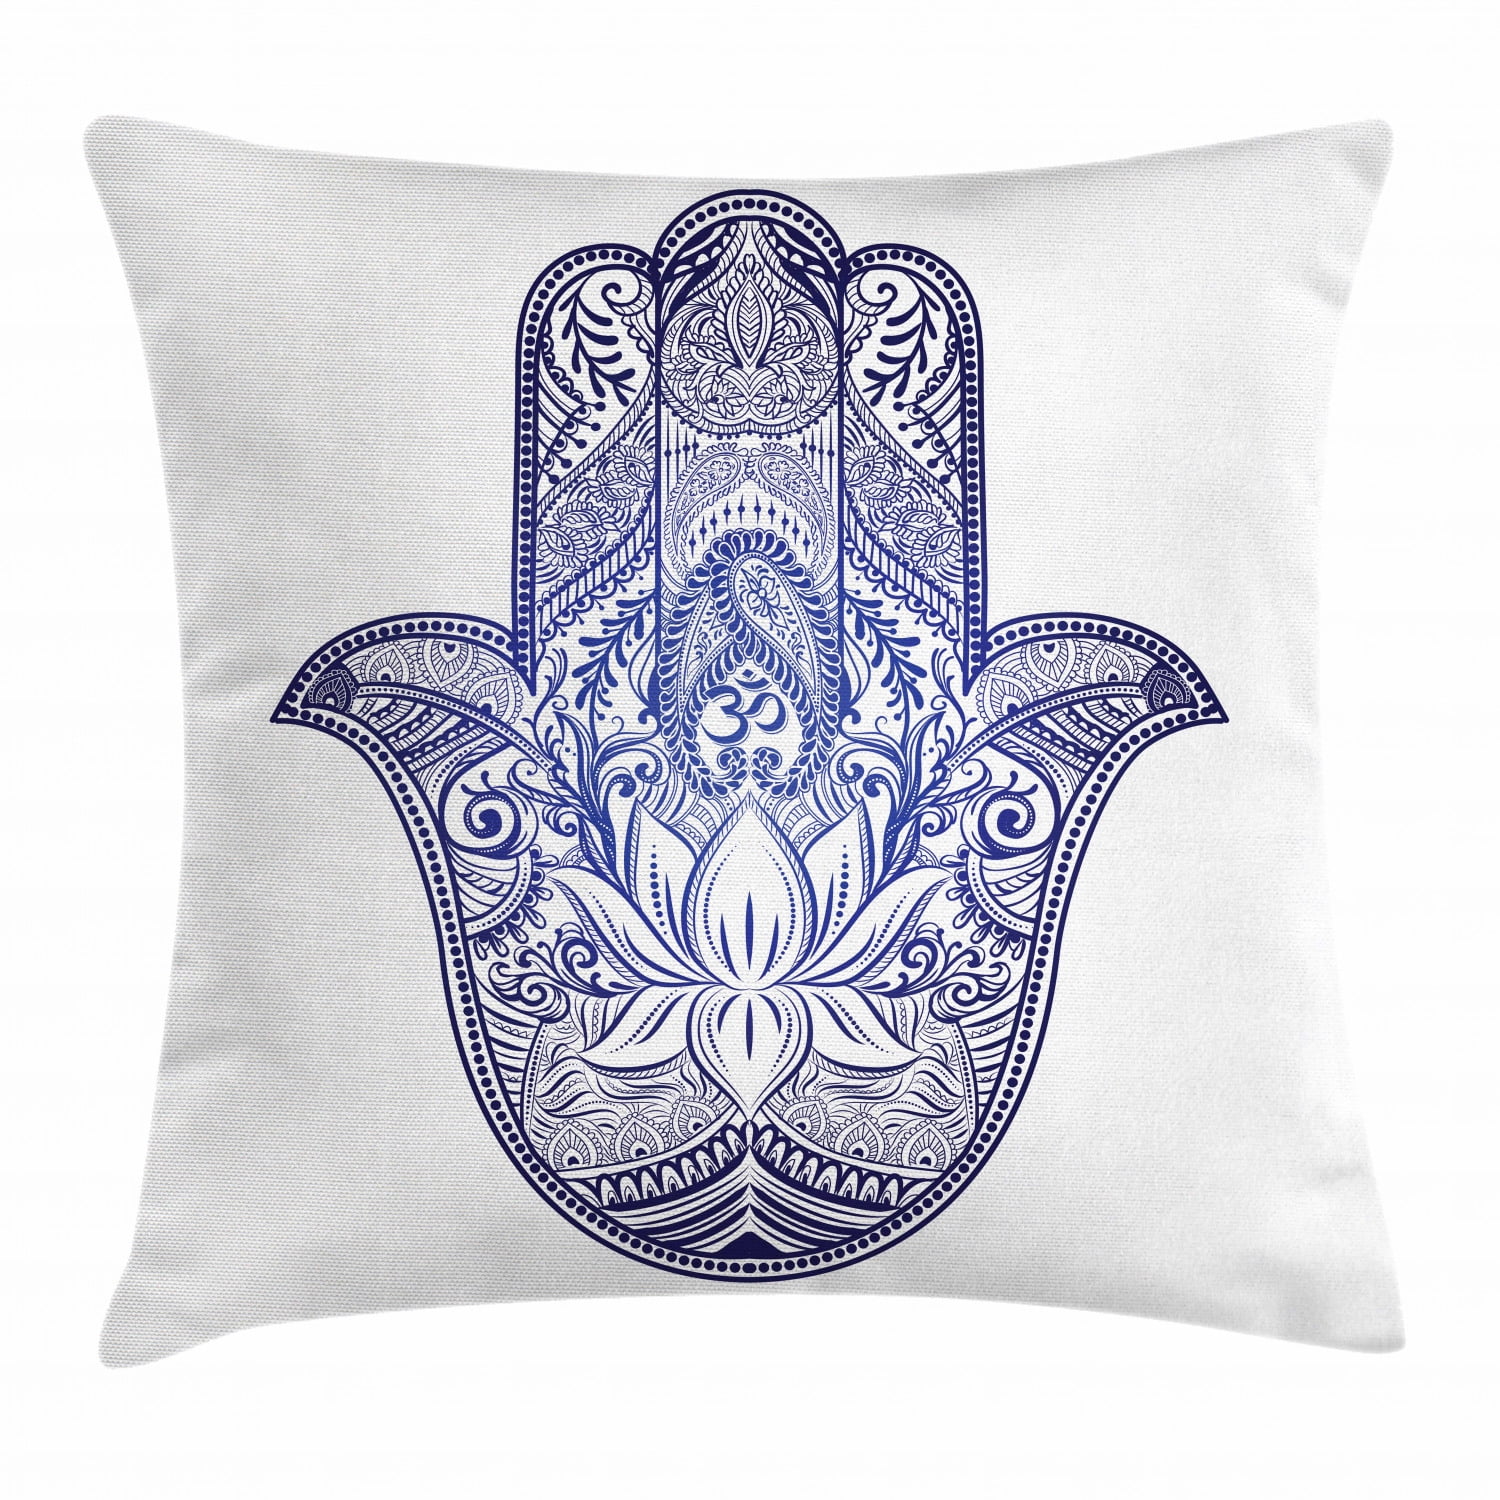 Hamsa Throw Pillow Cushion Cover, Arabic Culture Motifs with Paisleys ...